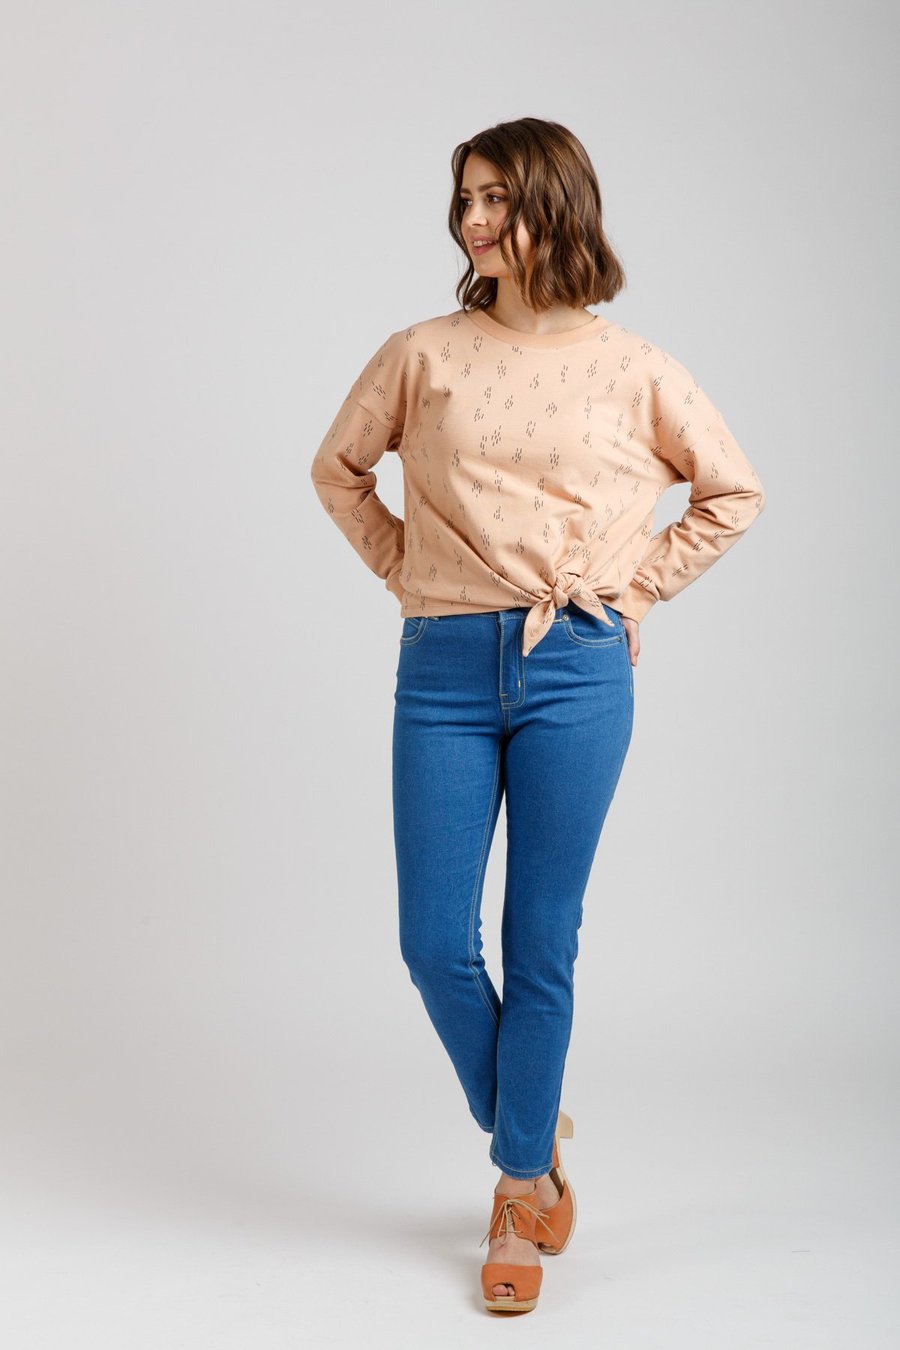 Jarrah sweater pattern- Megan Nielsen